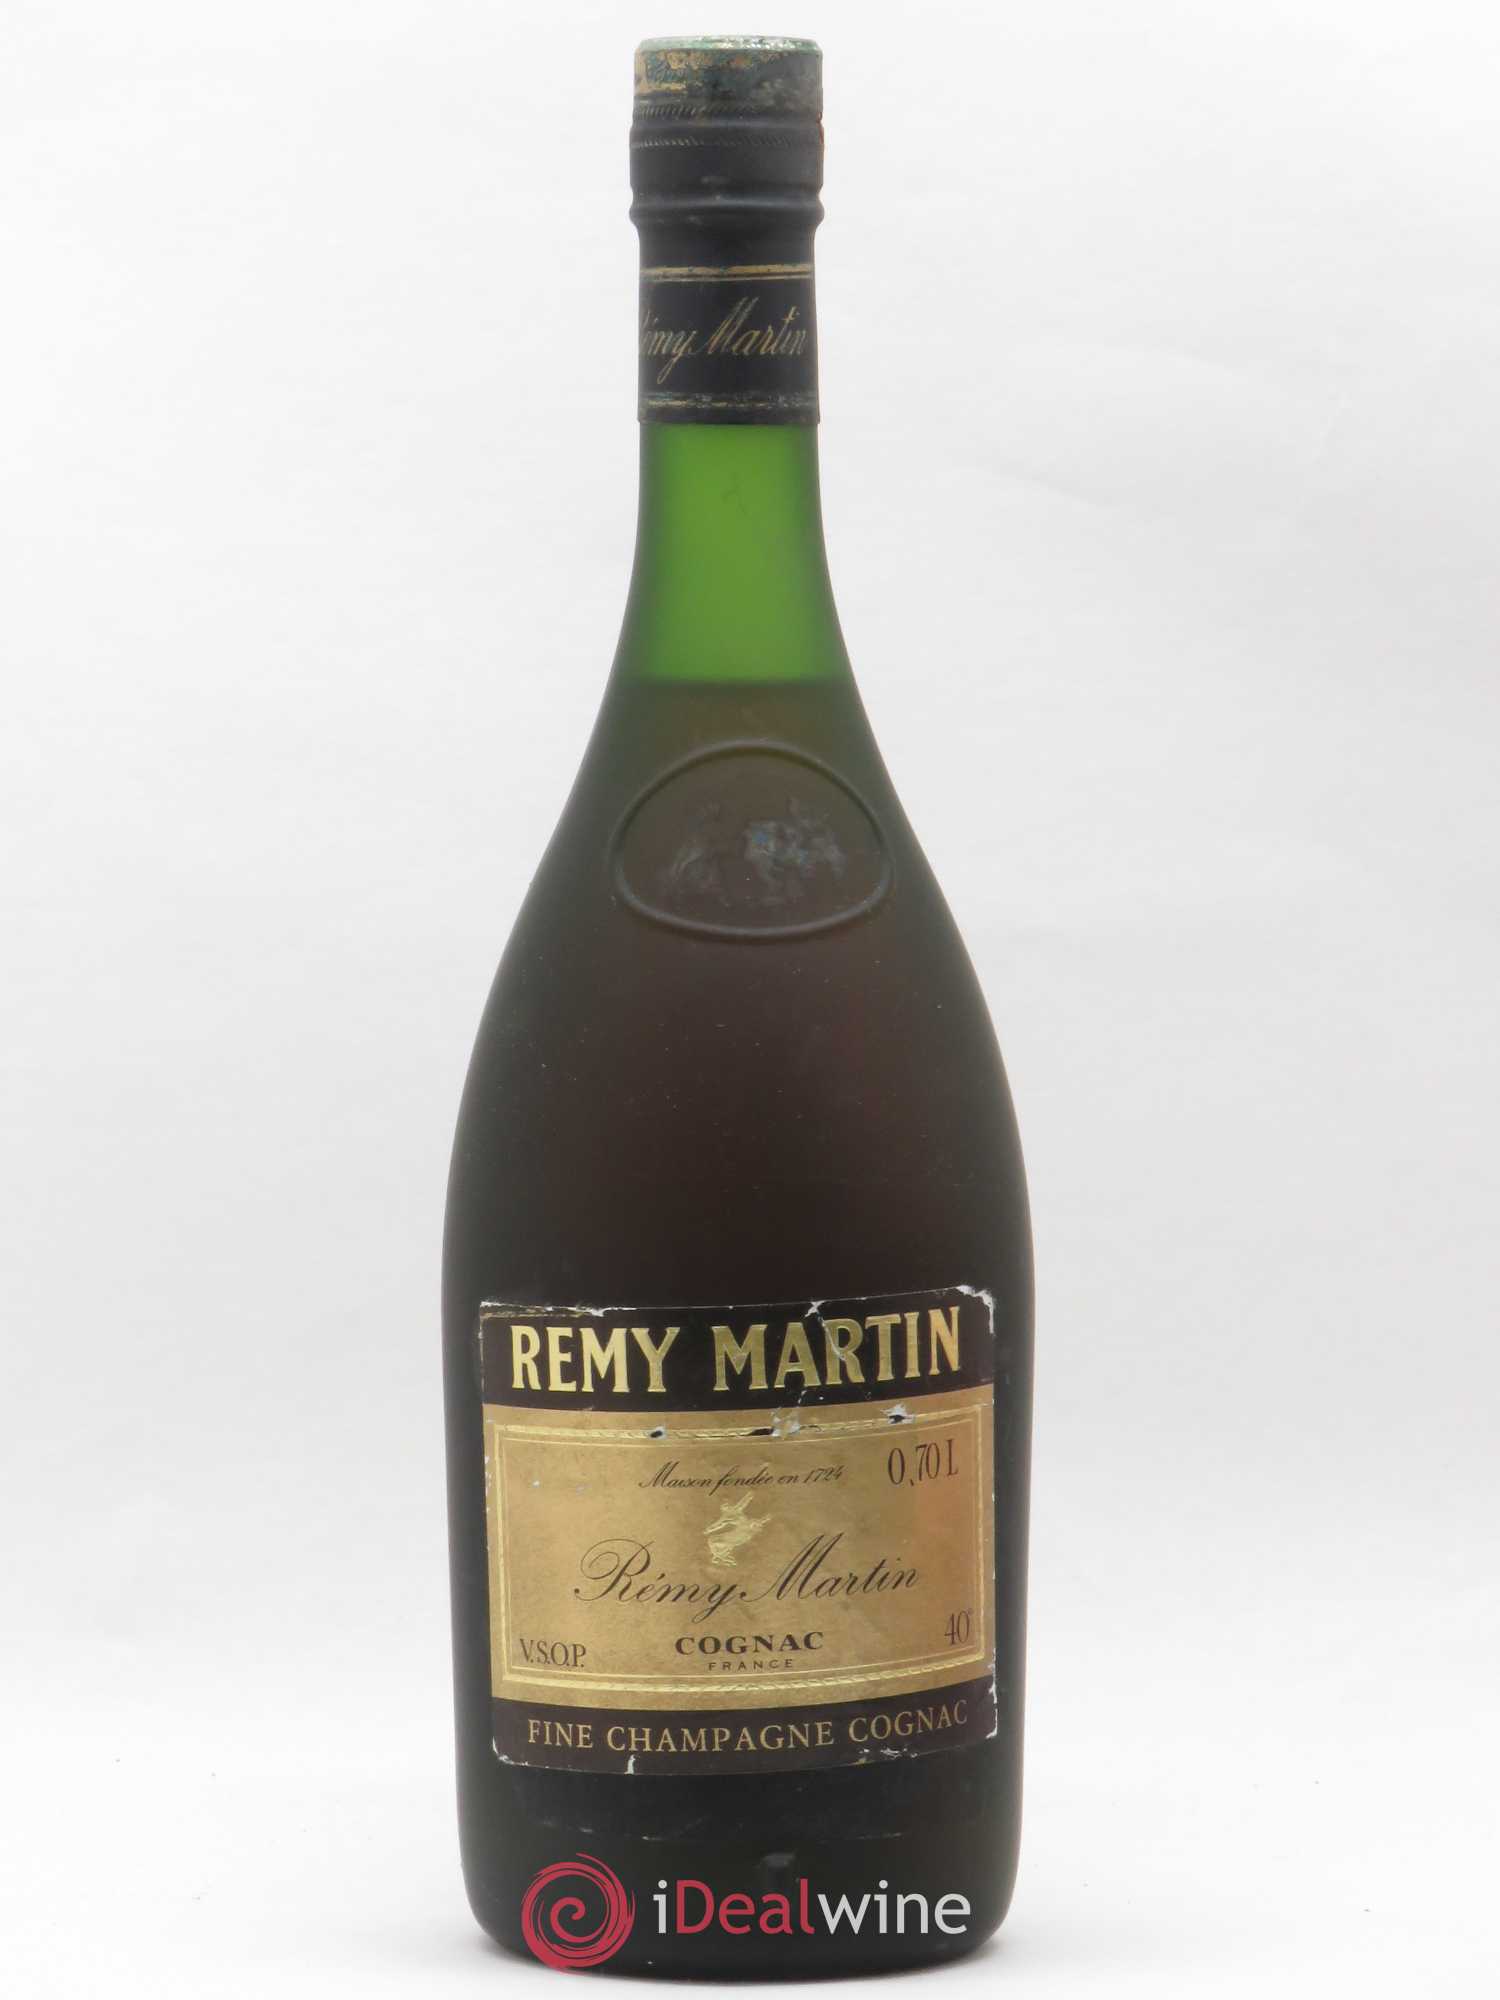 Remy шампанское. Коньяк Fine Champagne. Remy Martin XO Cognac Fine Champagne 1724. Remy Martin Cognac Fine Champagne цена.